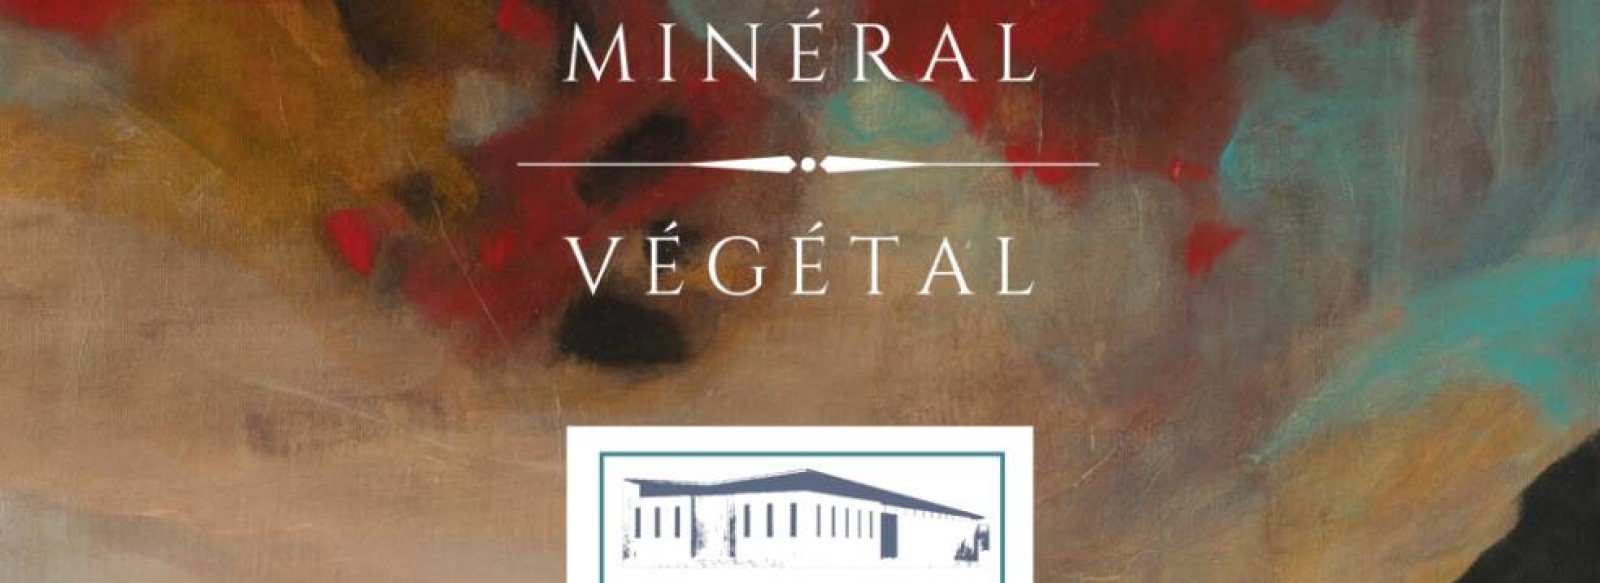 Exposition de peinture : "Mineral / Vegetal"